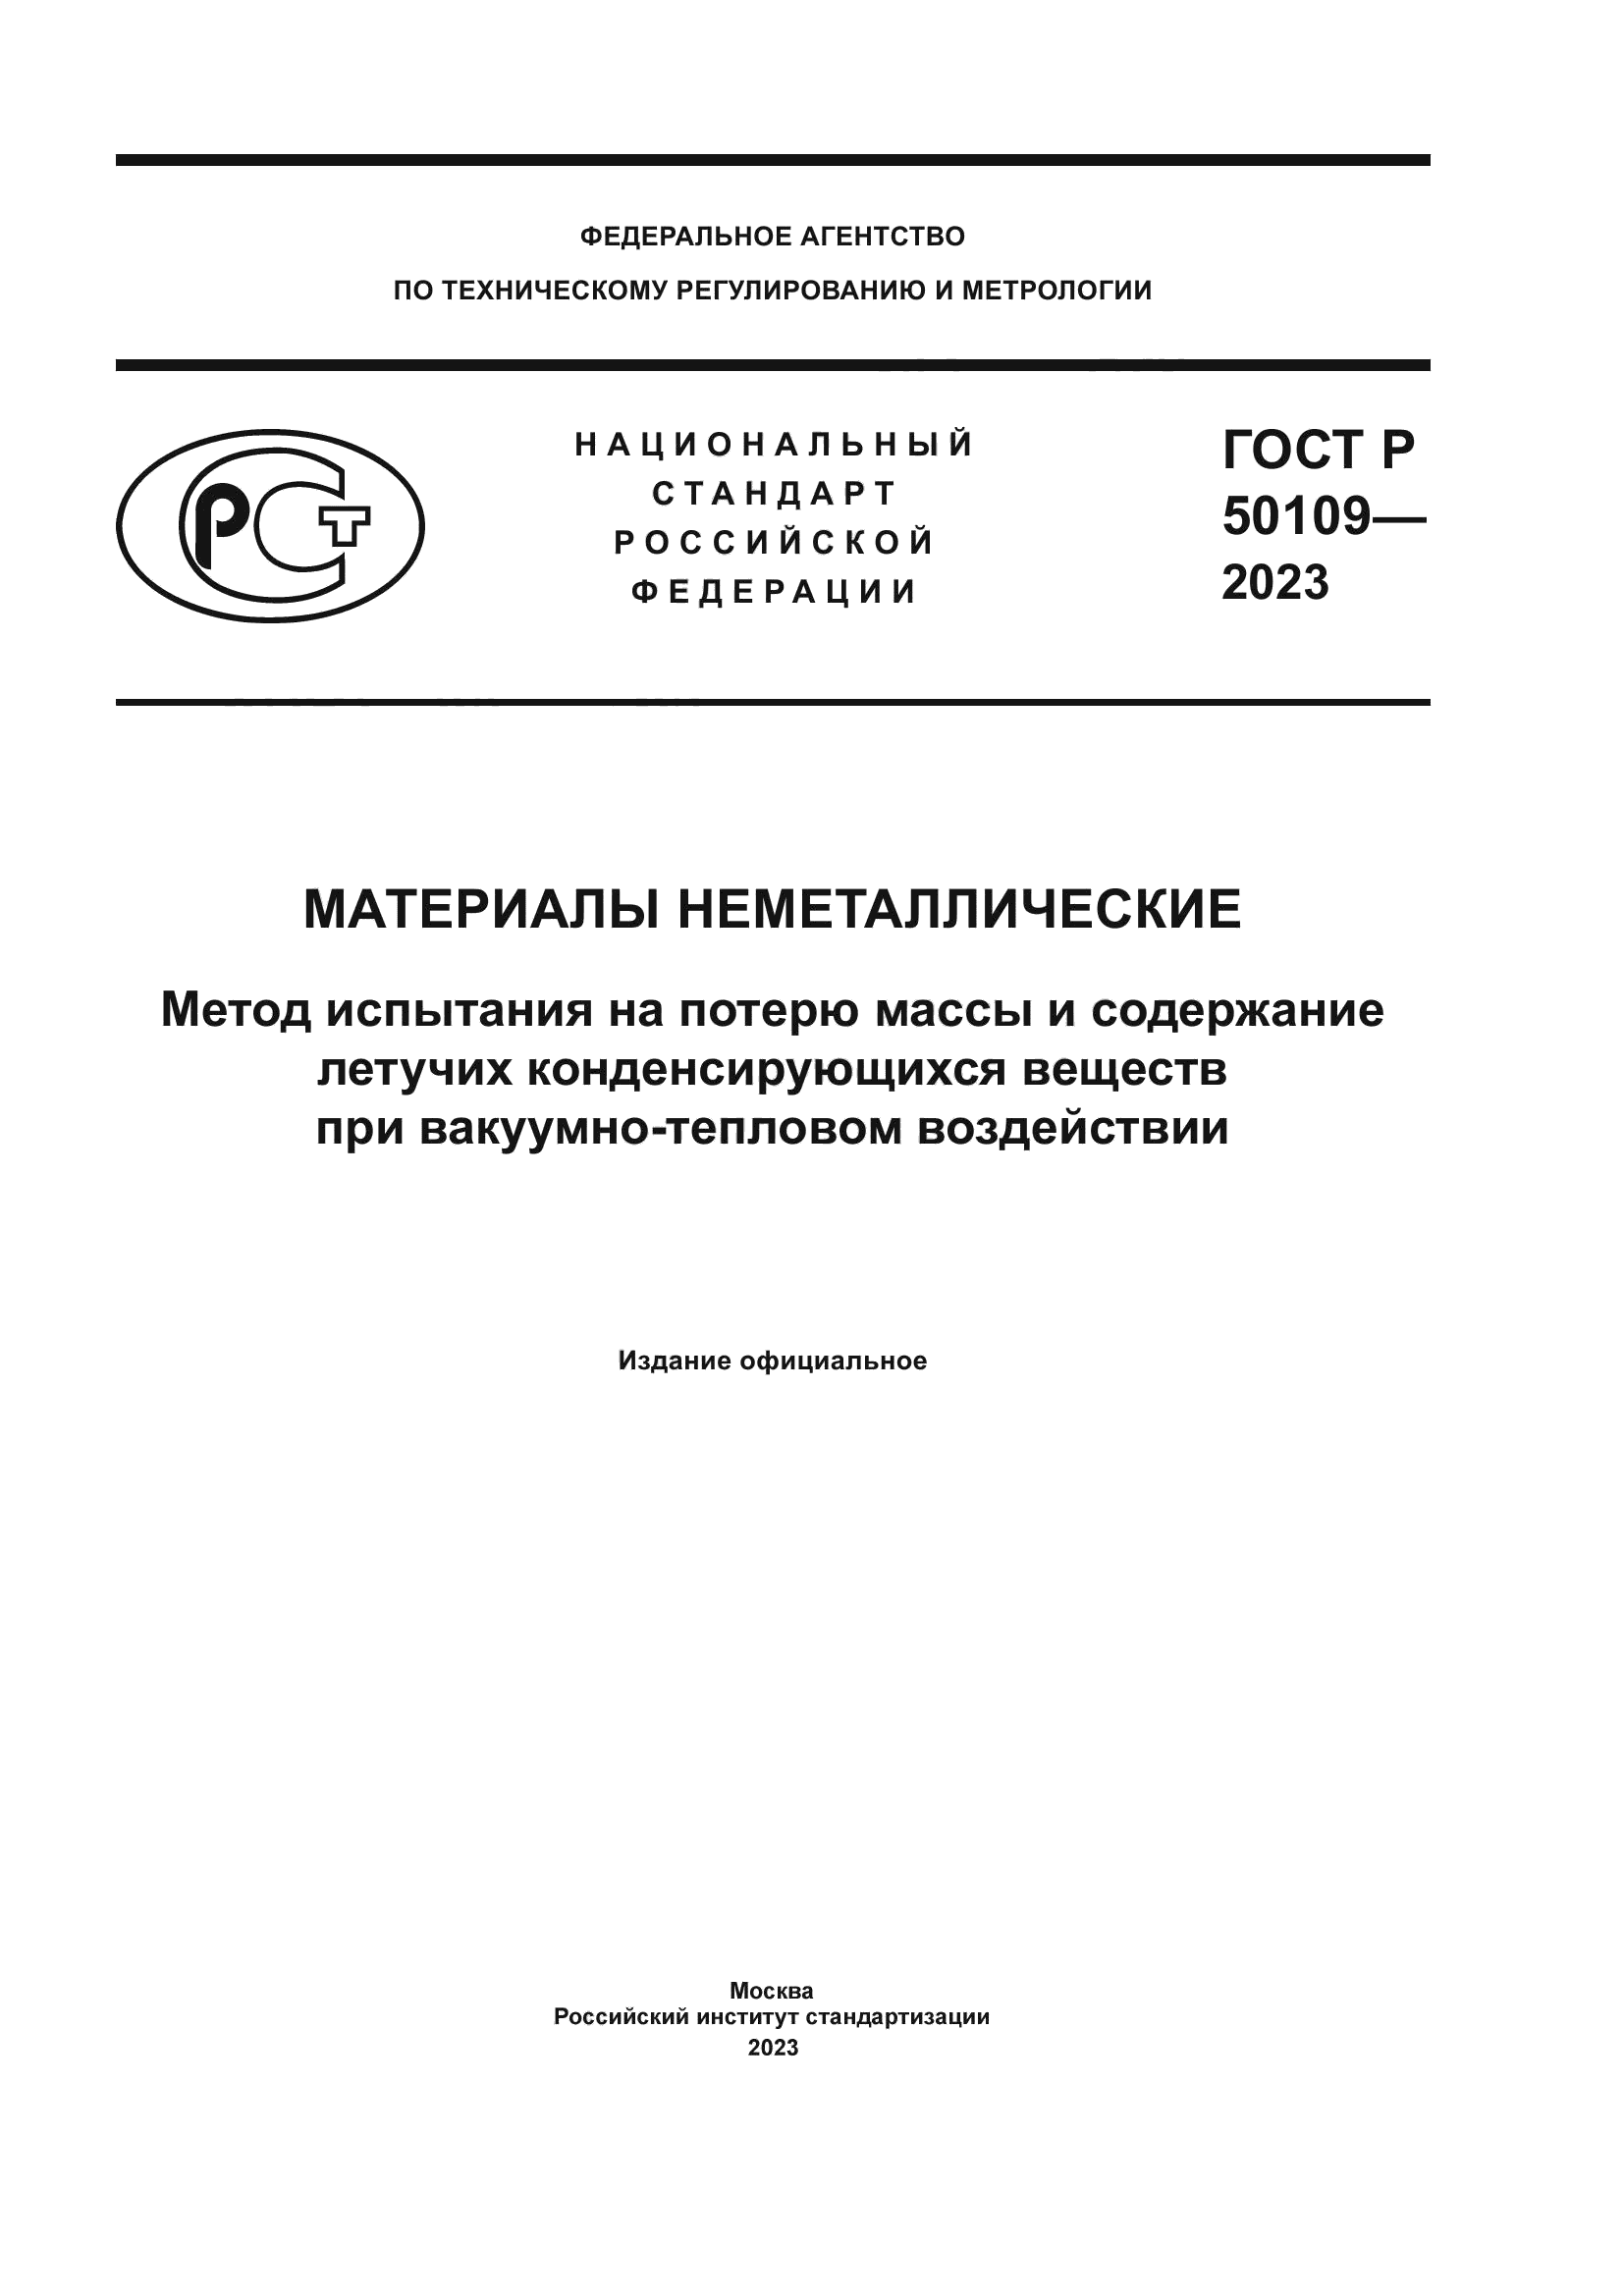 ГОСТ Р 50109-2023